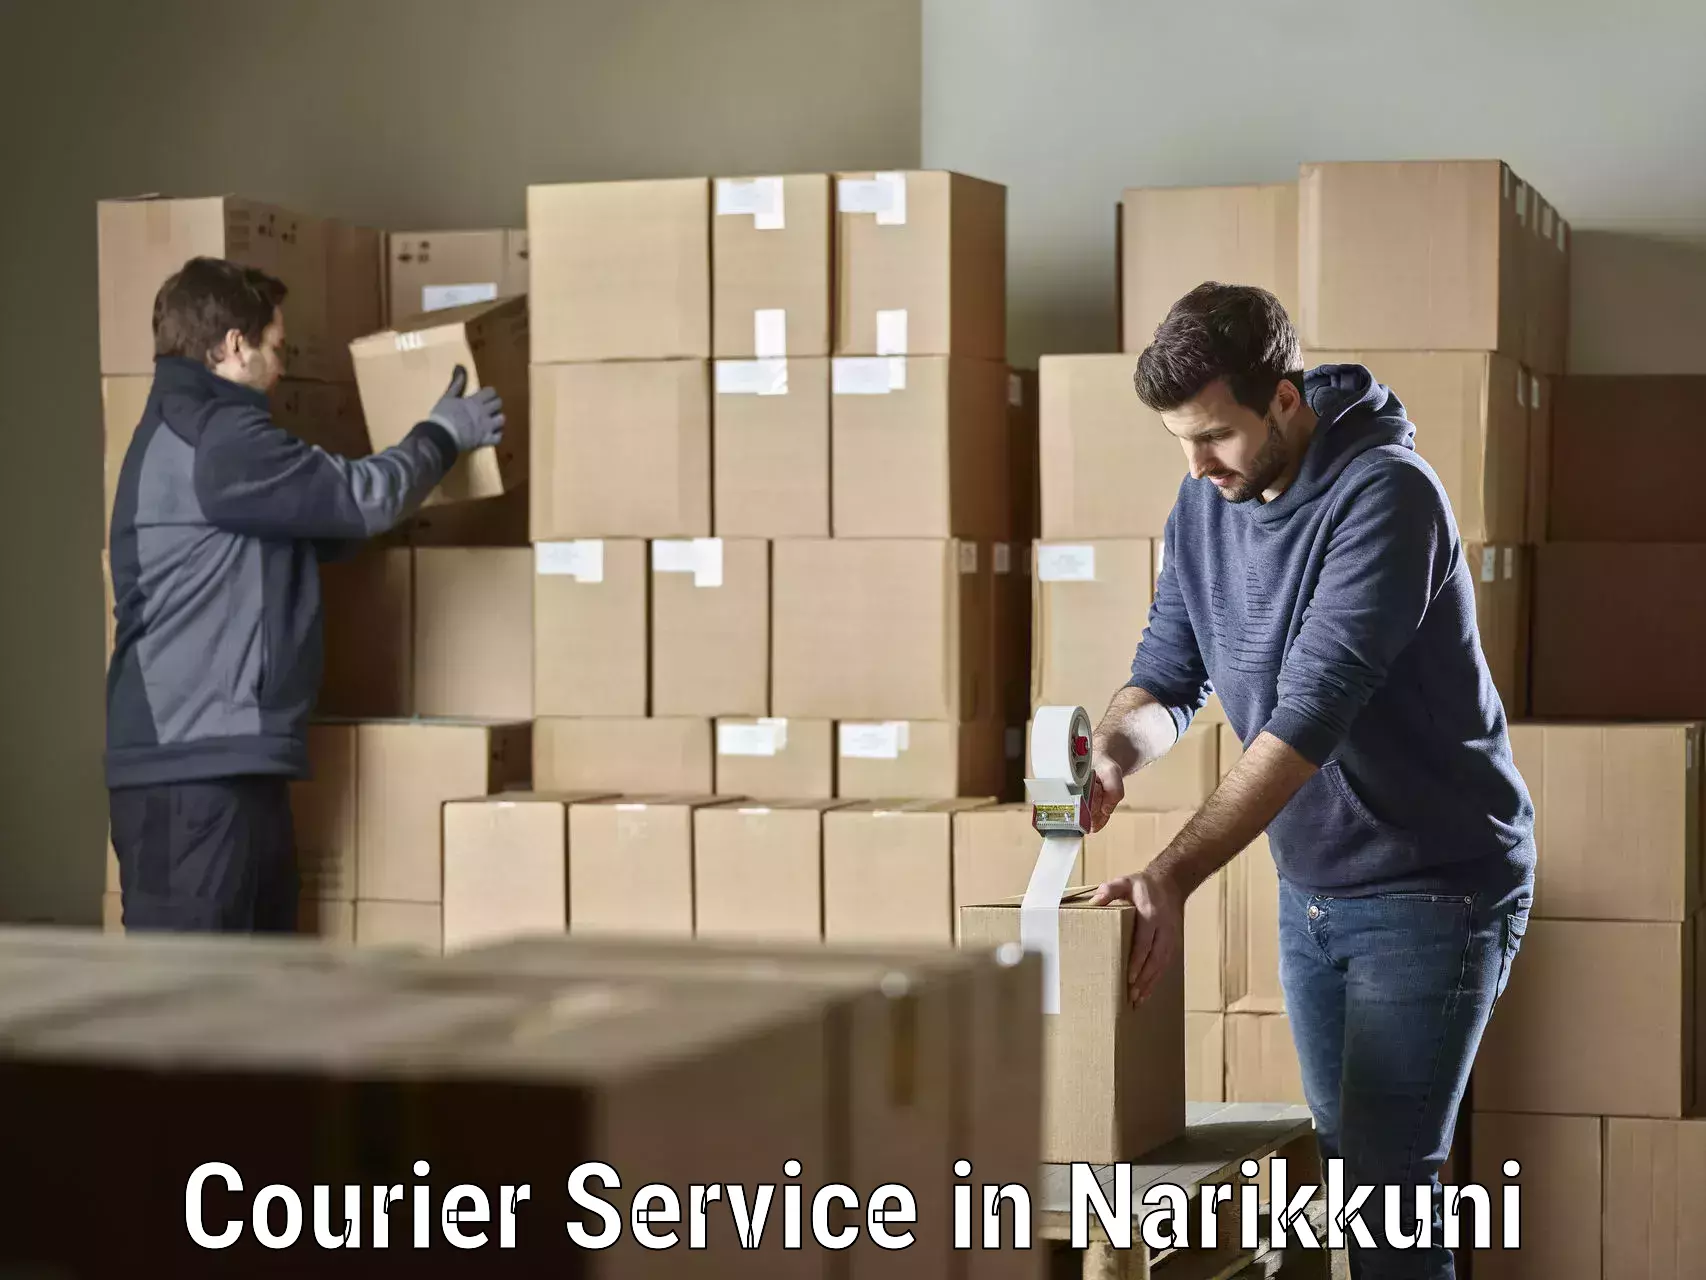 Efficient parcel delivery in Narikkuni